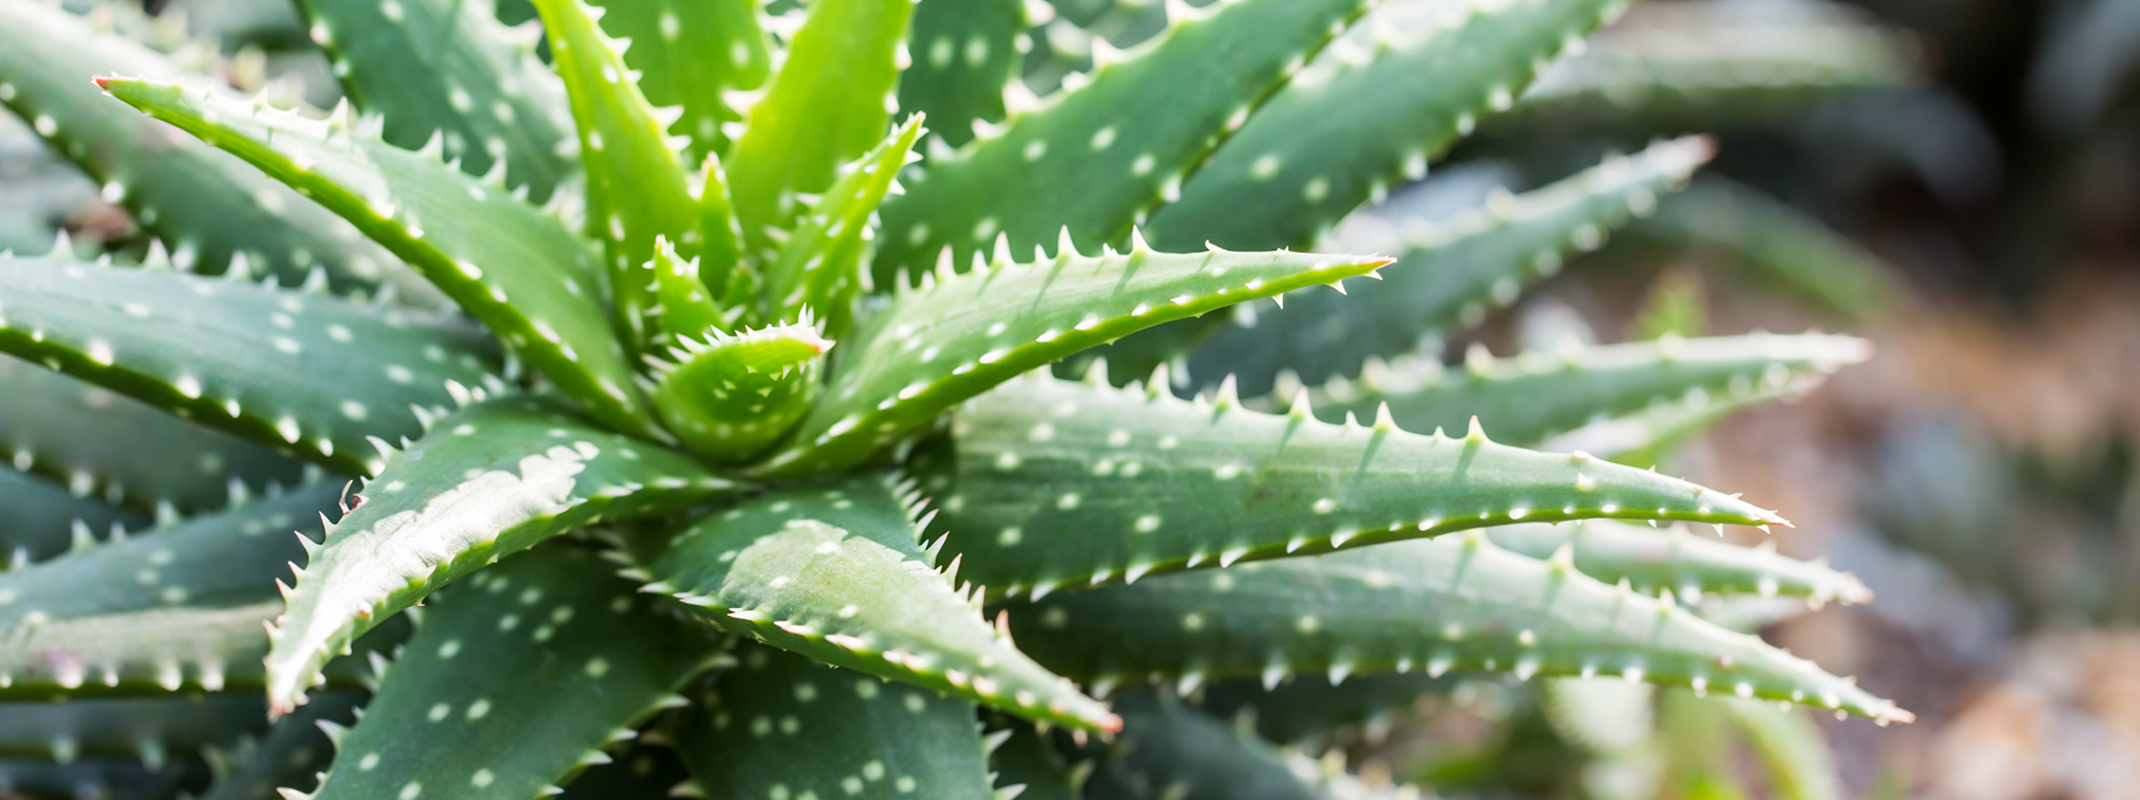 Aloe vera plant